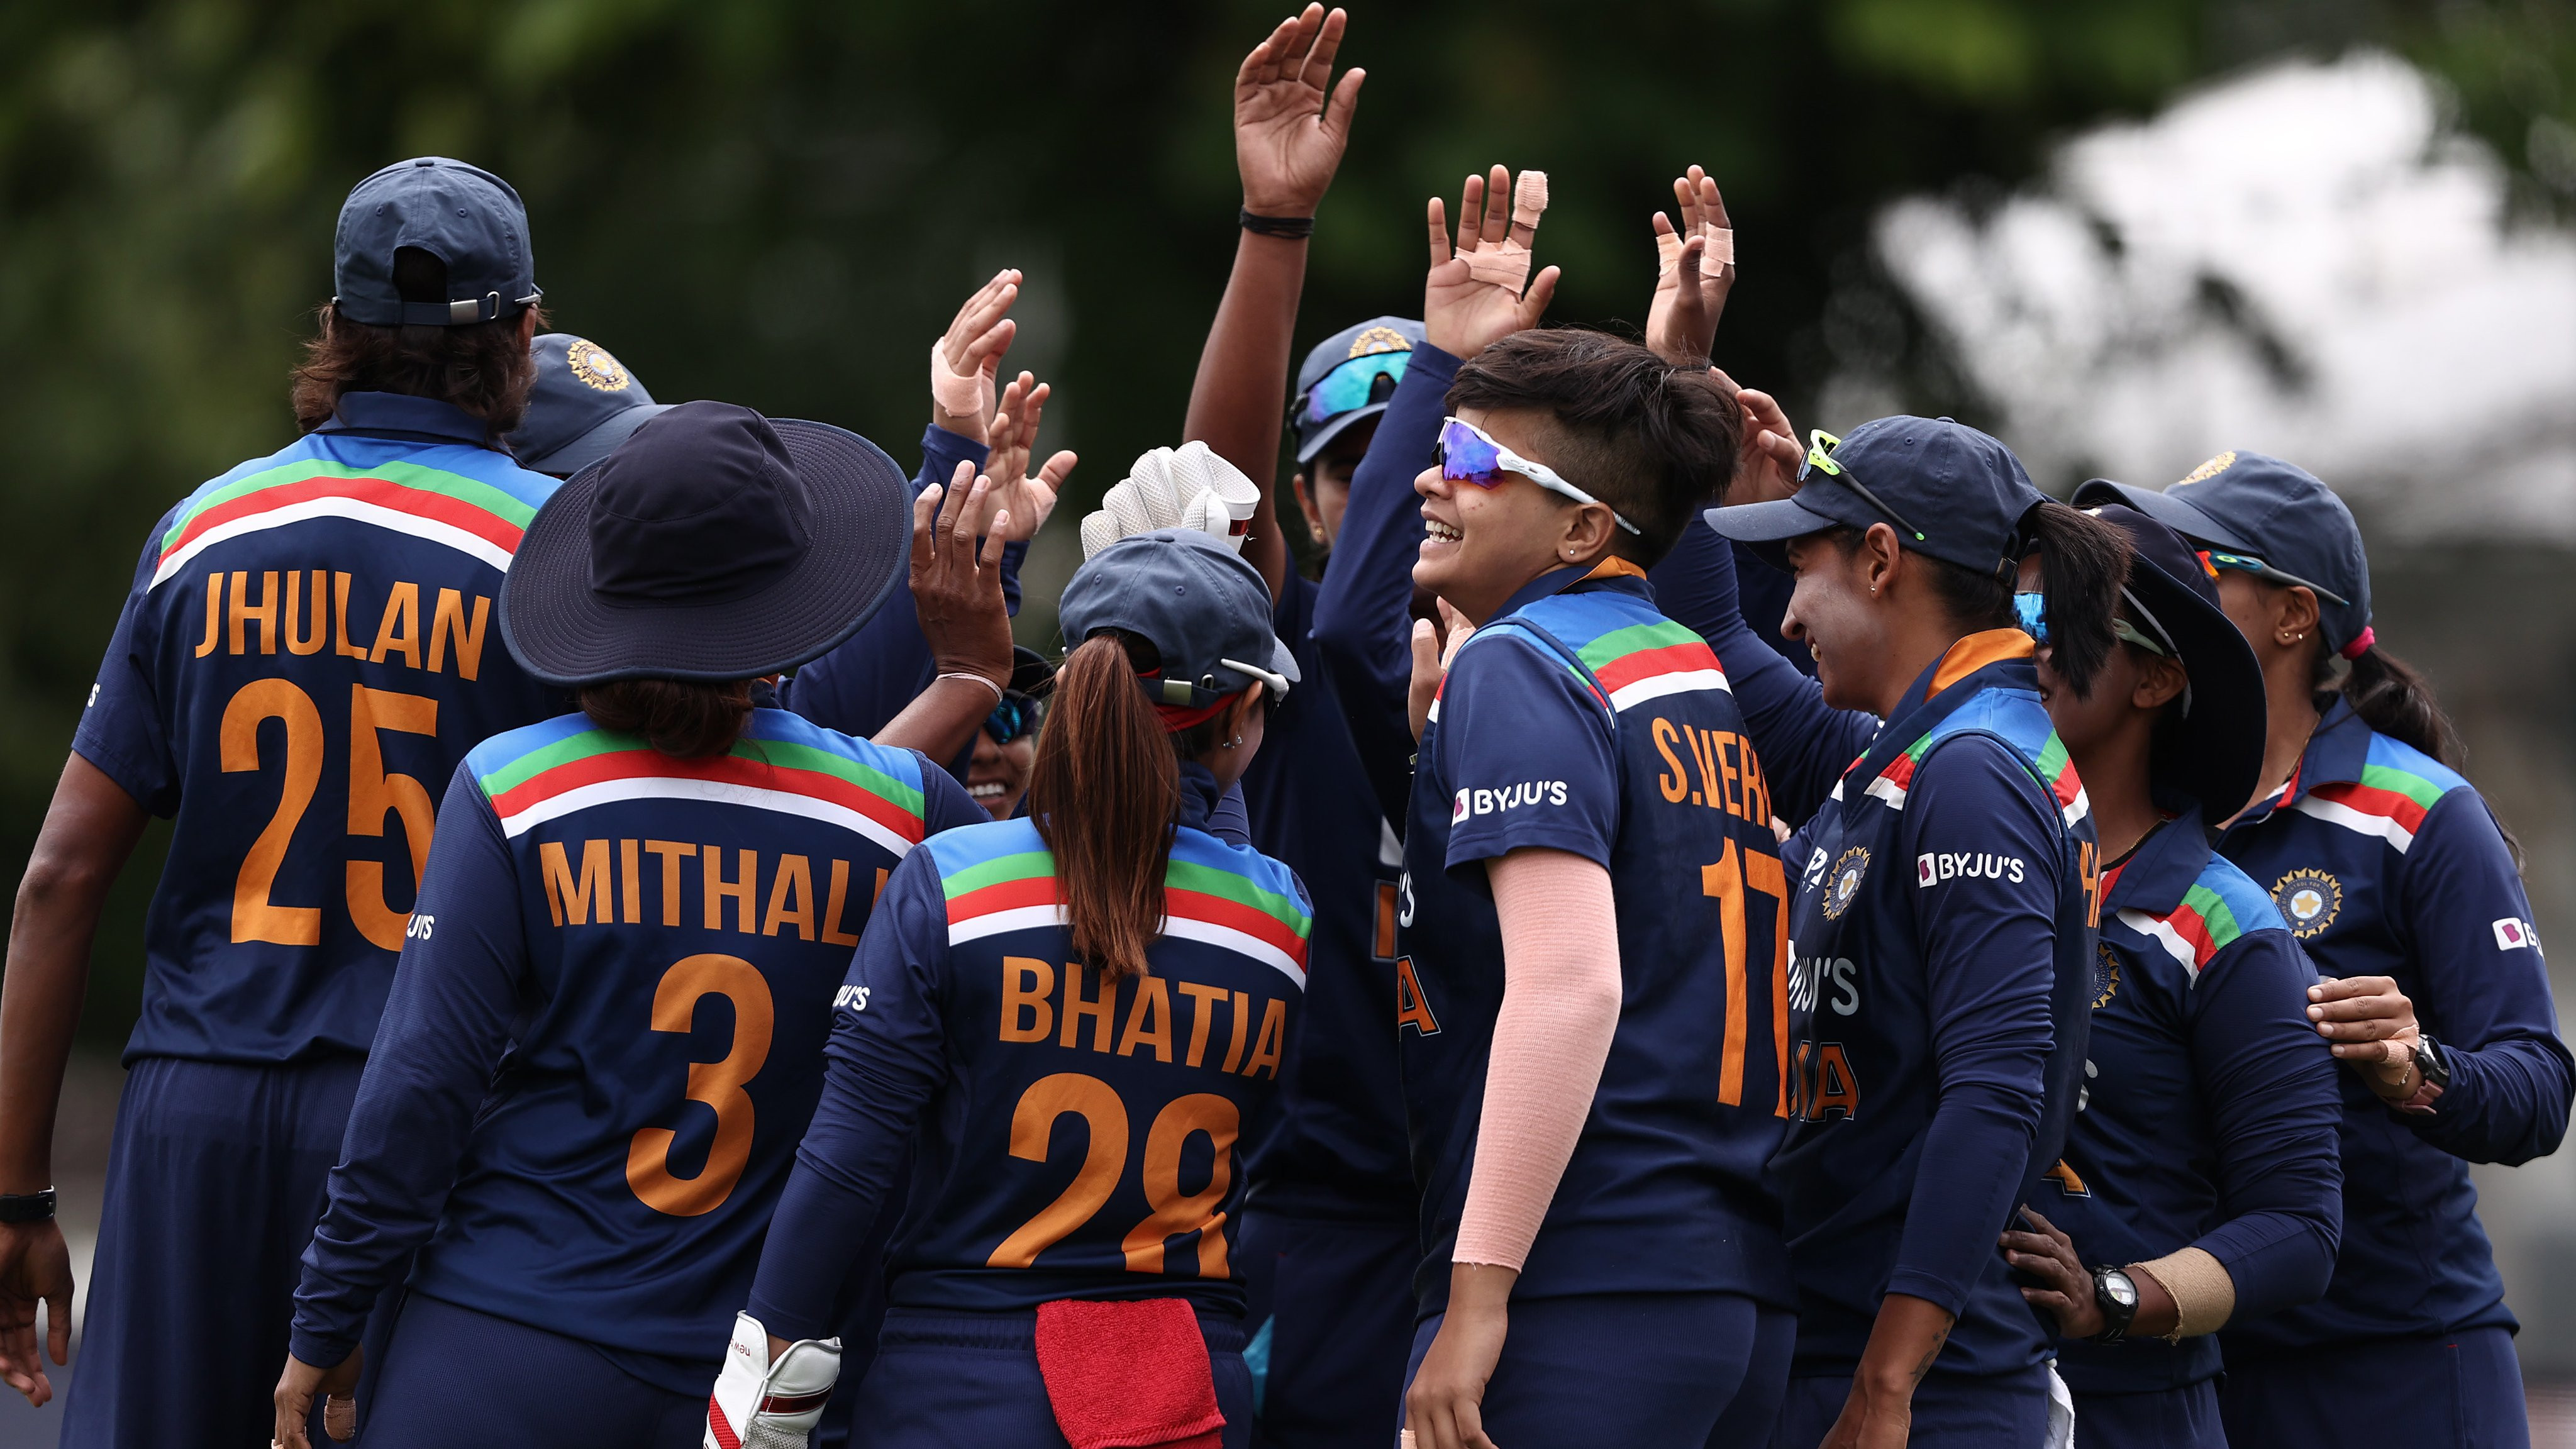 AUSW v INDW 2021: India women's team unlikely to get training permission during quarantine in Australia